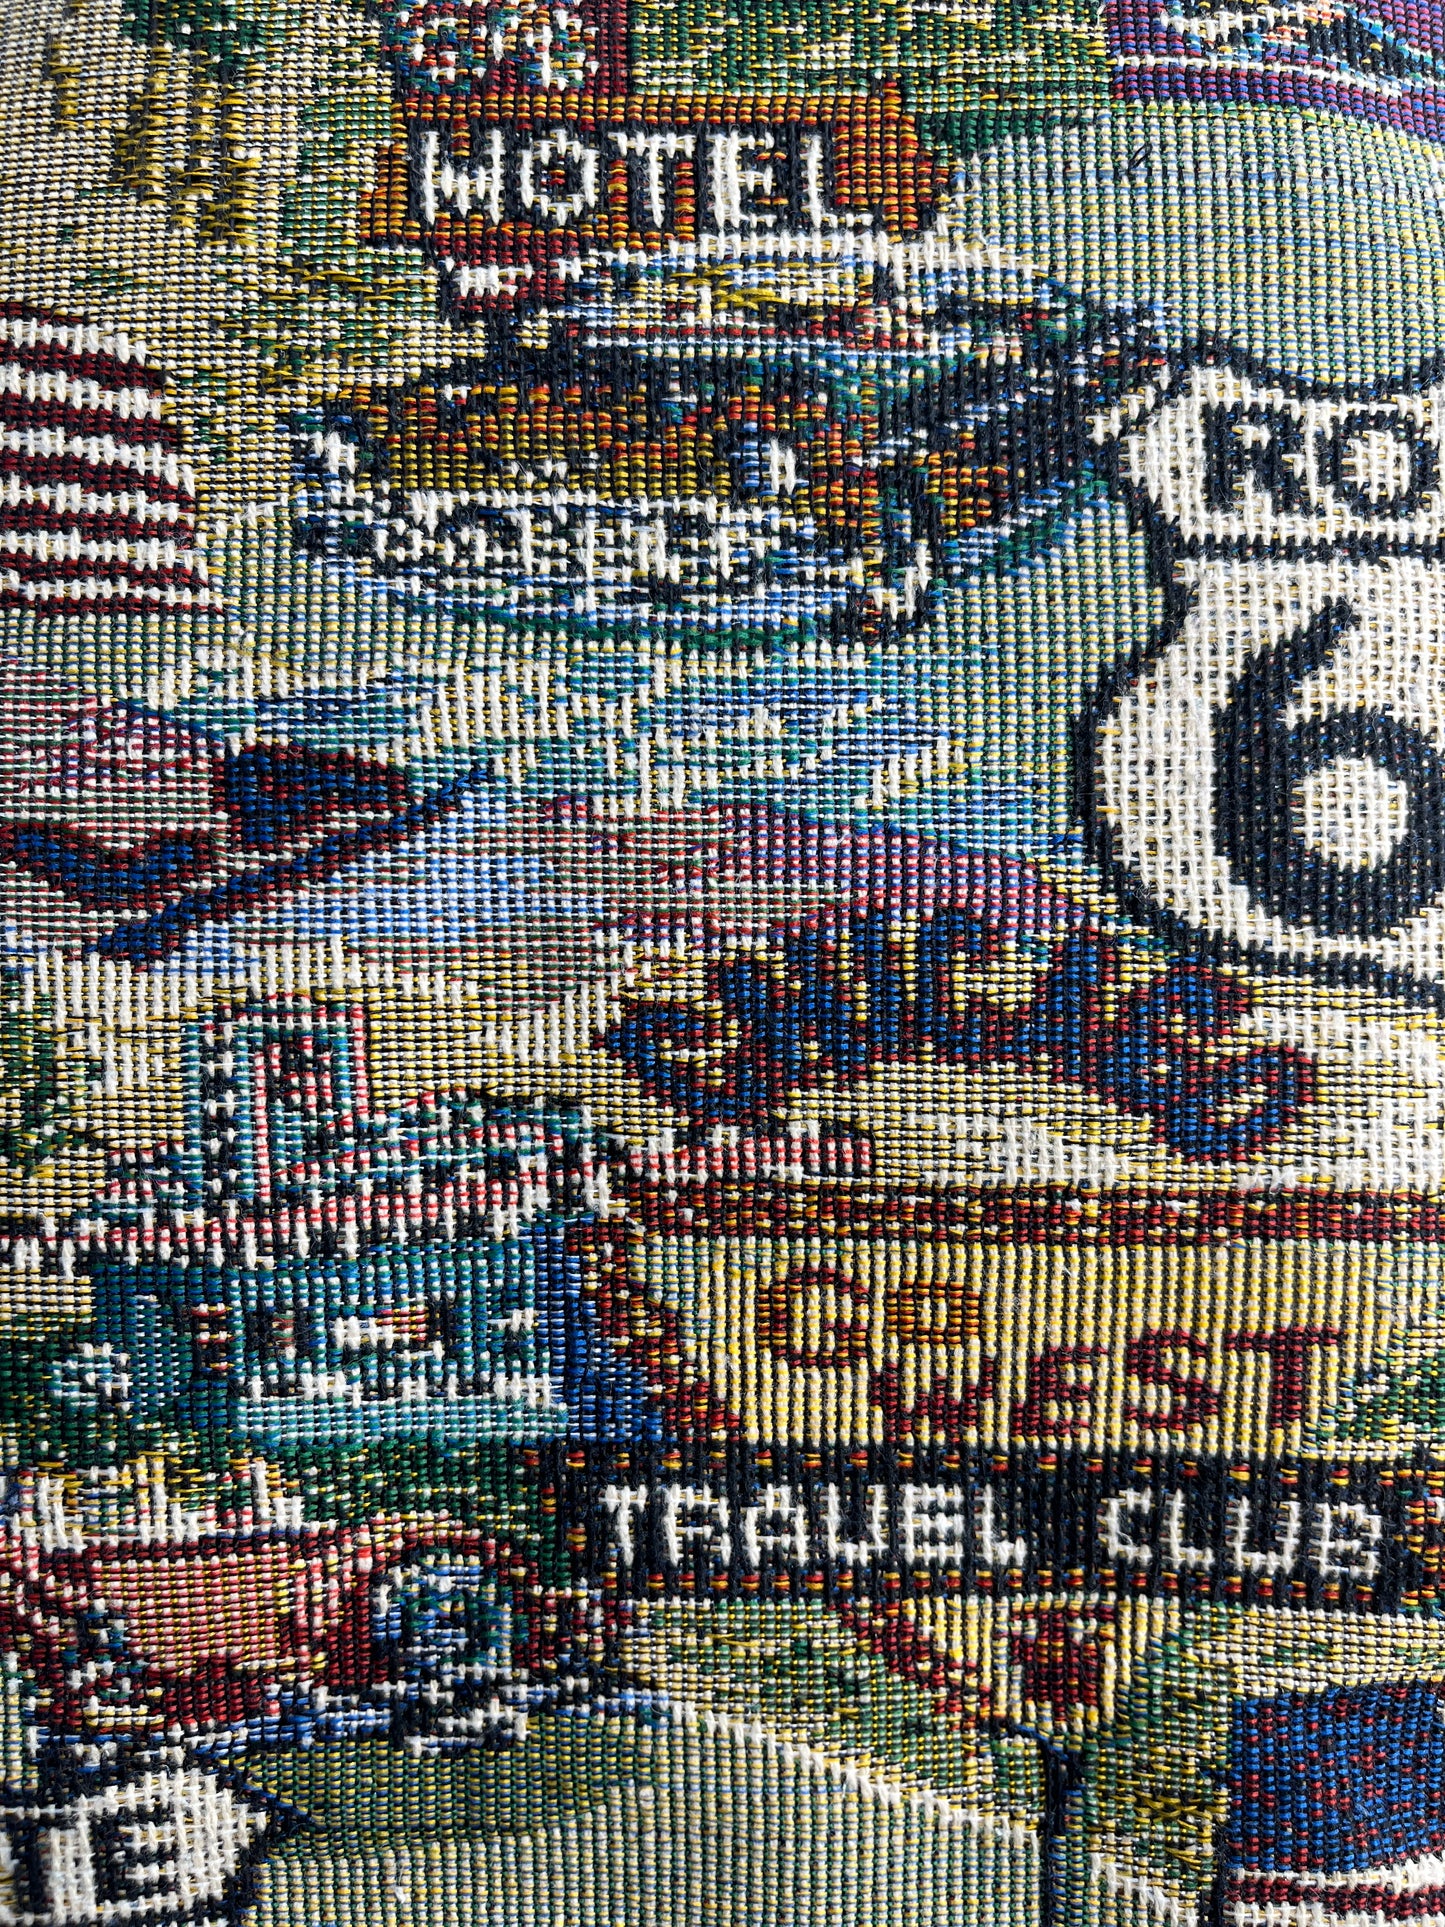 Canvas Bag/ Purse Route 66 Theme Black Trim Multi SKU 000432